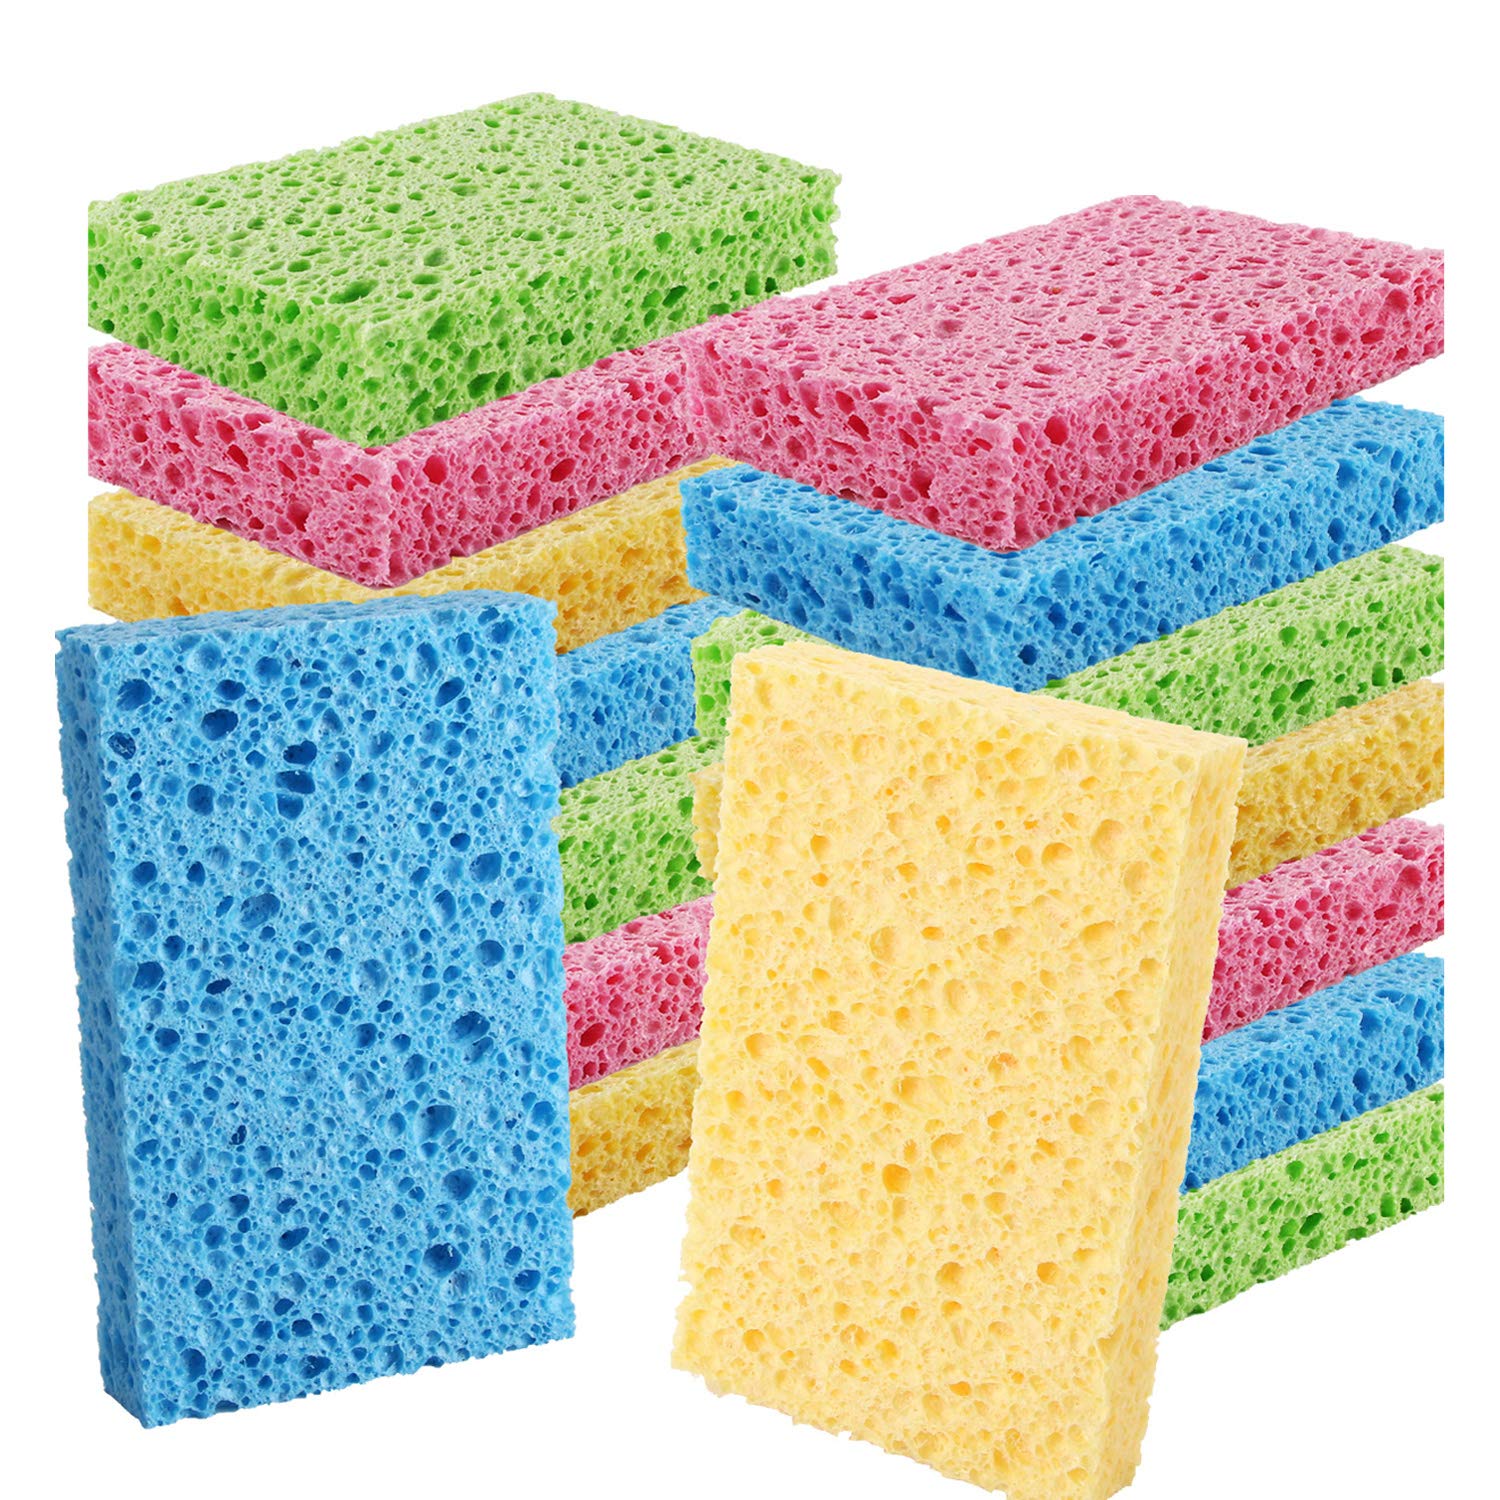 Cleaning Scrub Colored Sponge Non-Scratch Kitchen Cellulose Dishwashing  Sponge 16Pack Biodegradable Natural Sponge 16 Count (